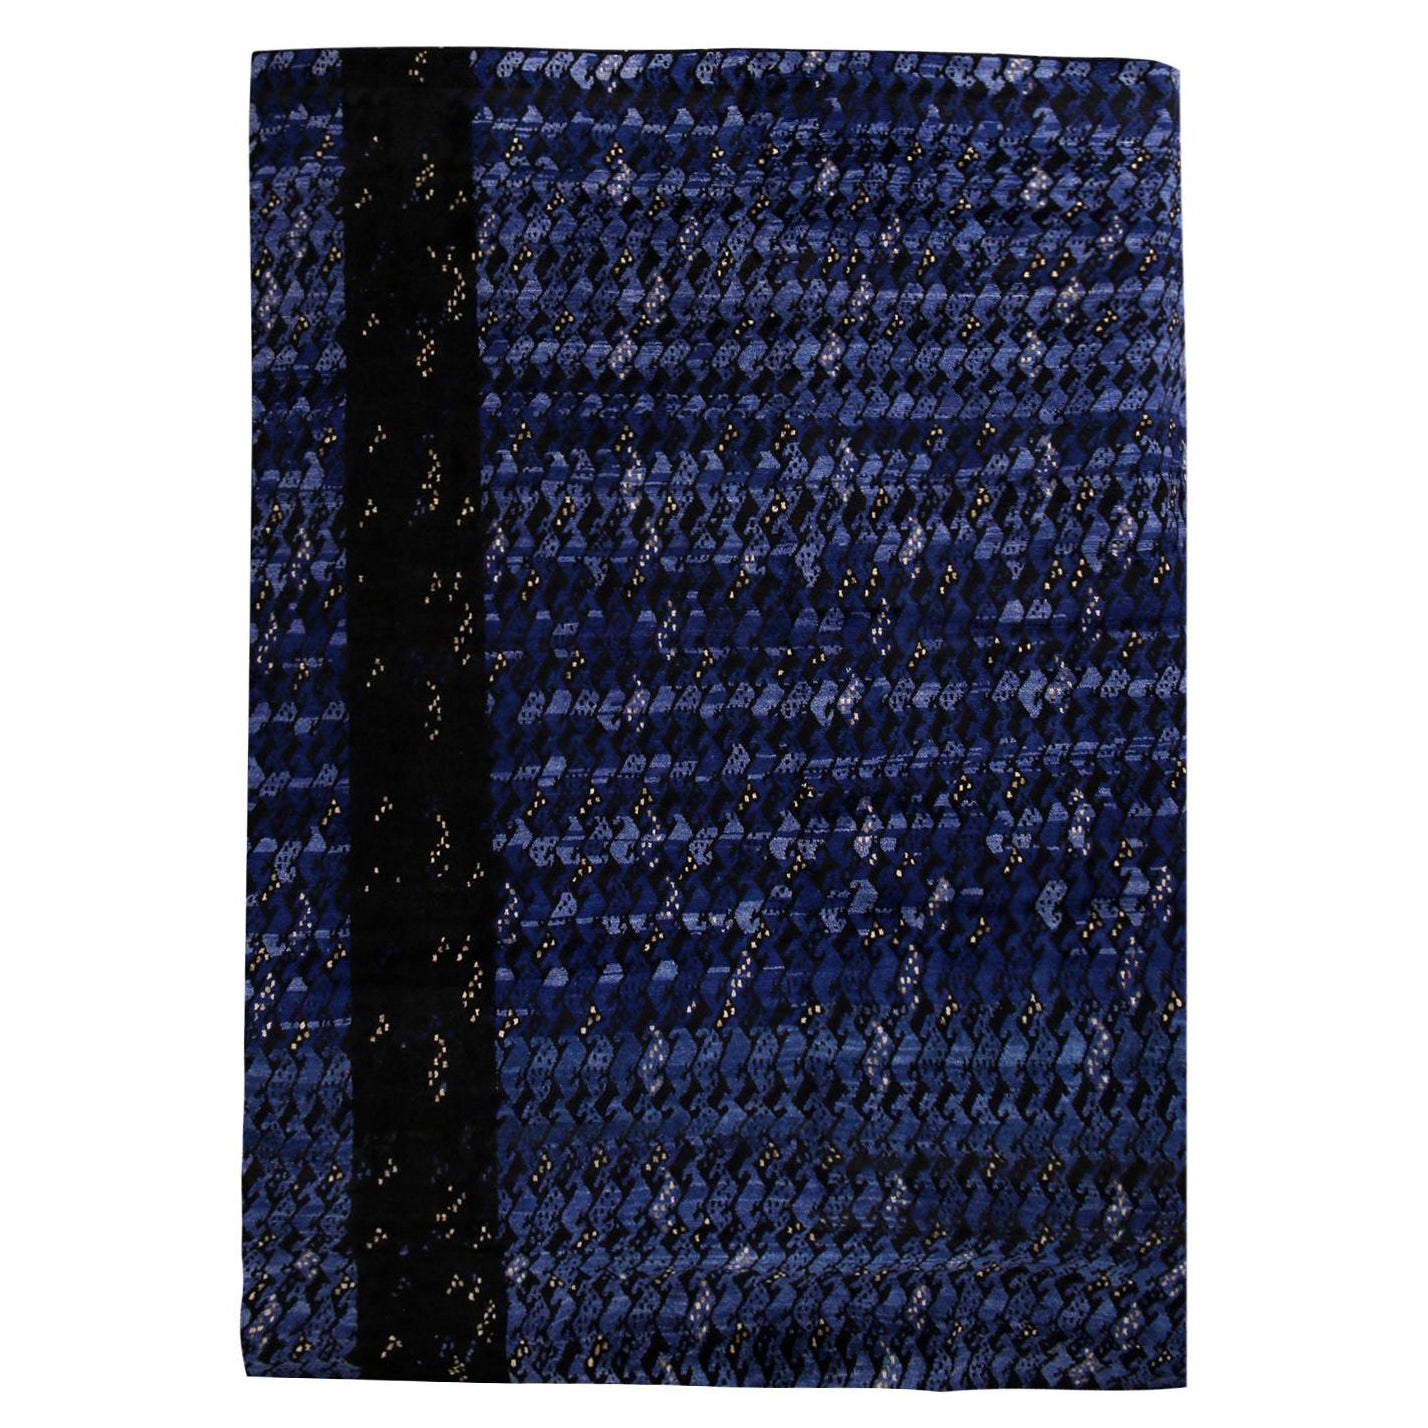 Rug & Kilim’s Scandinavian-Inspired Geometric Black and Blue Wool Pile Rug